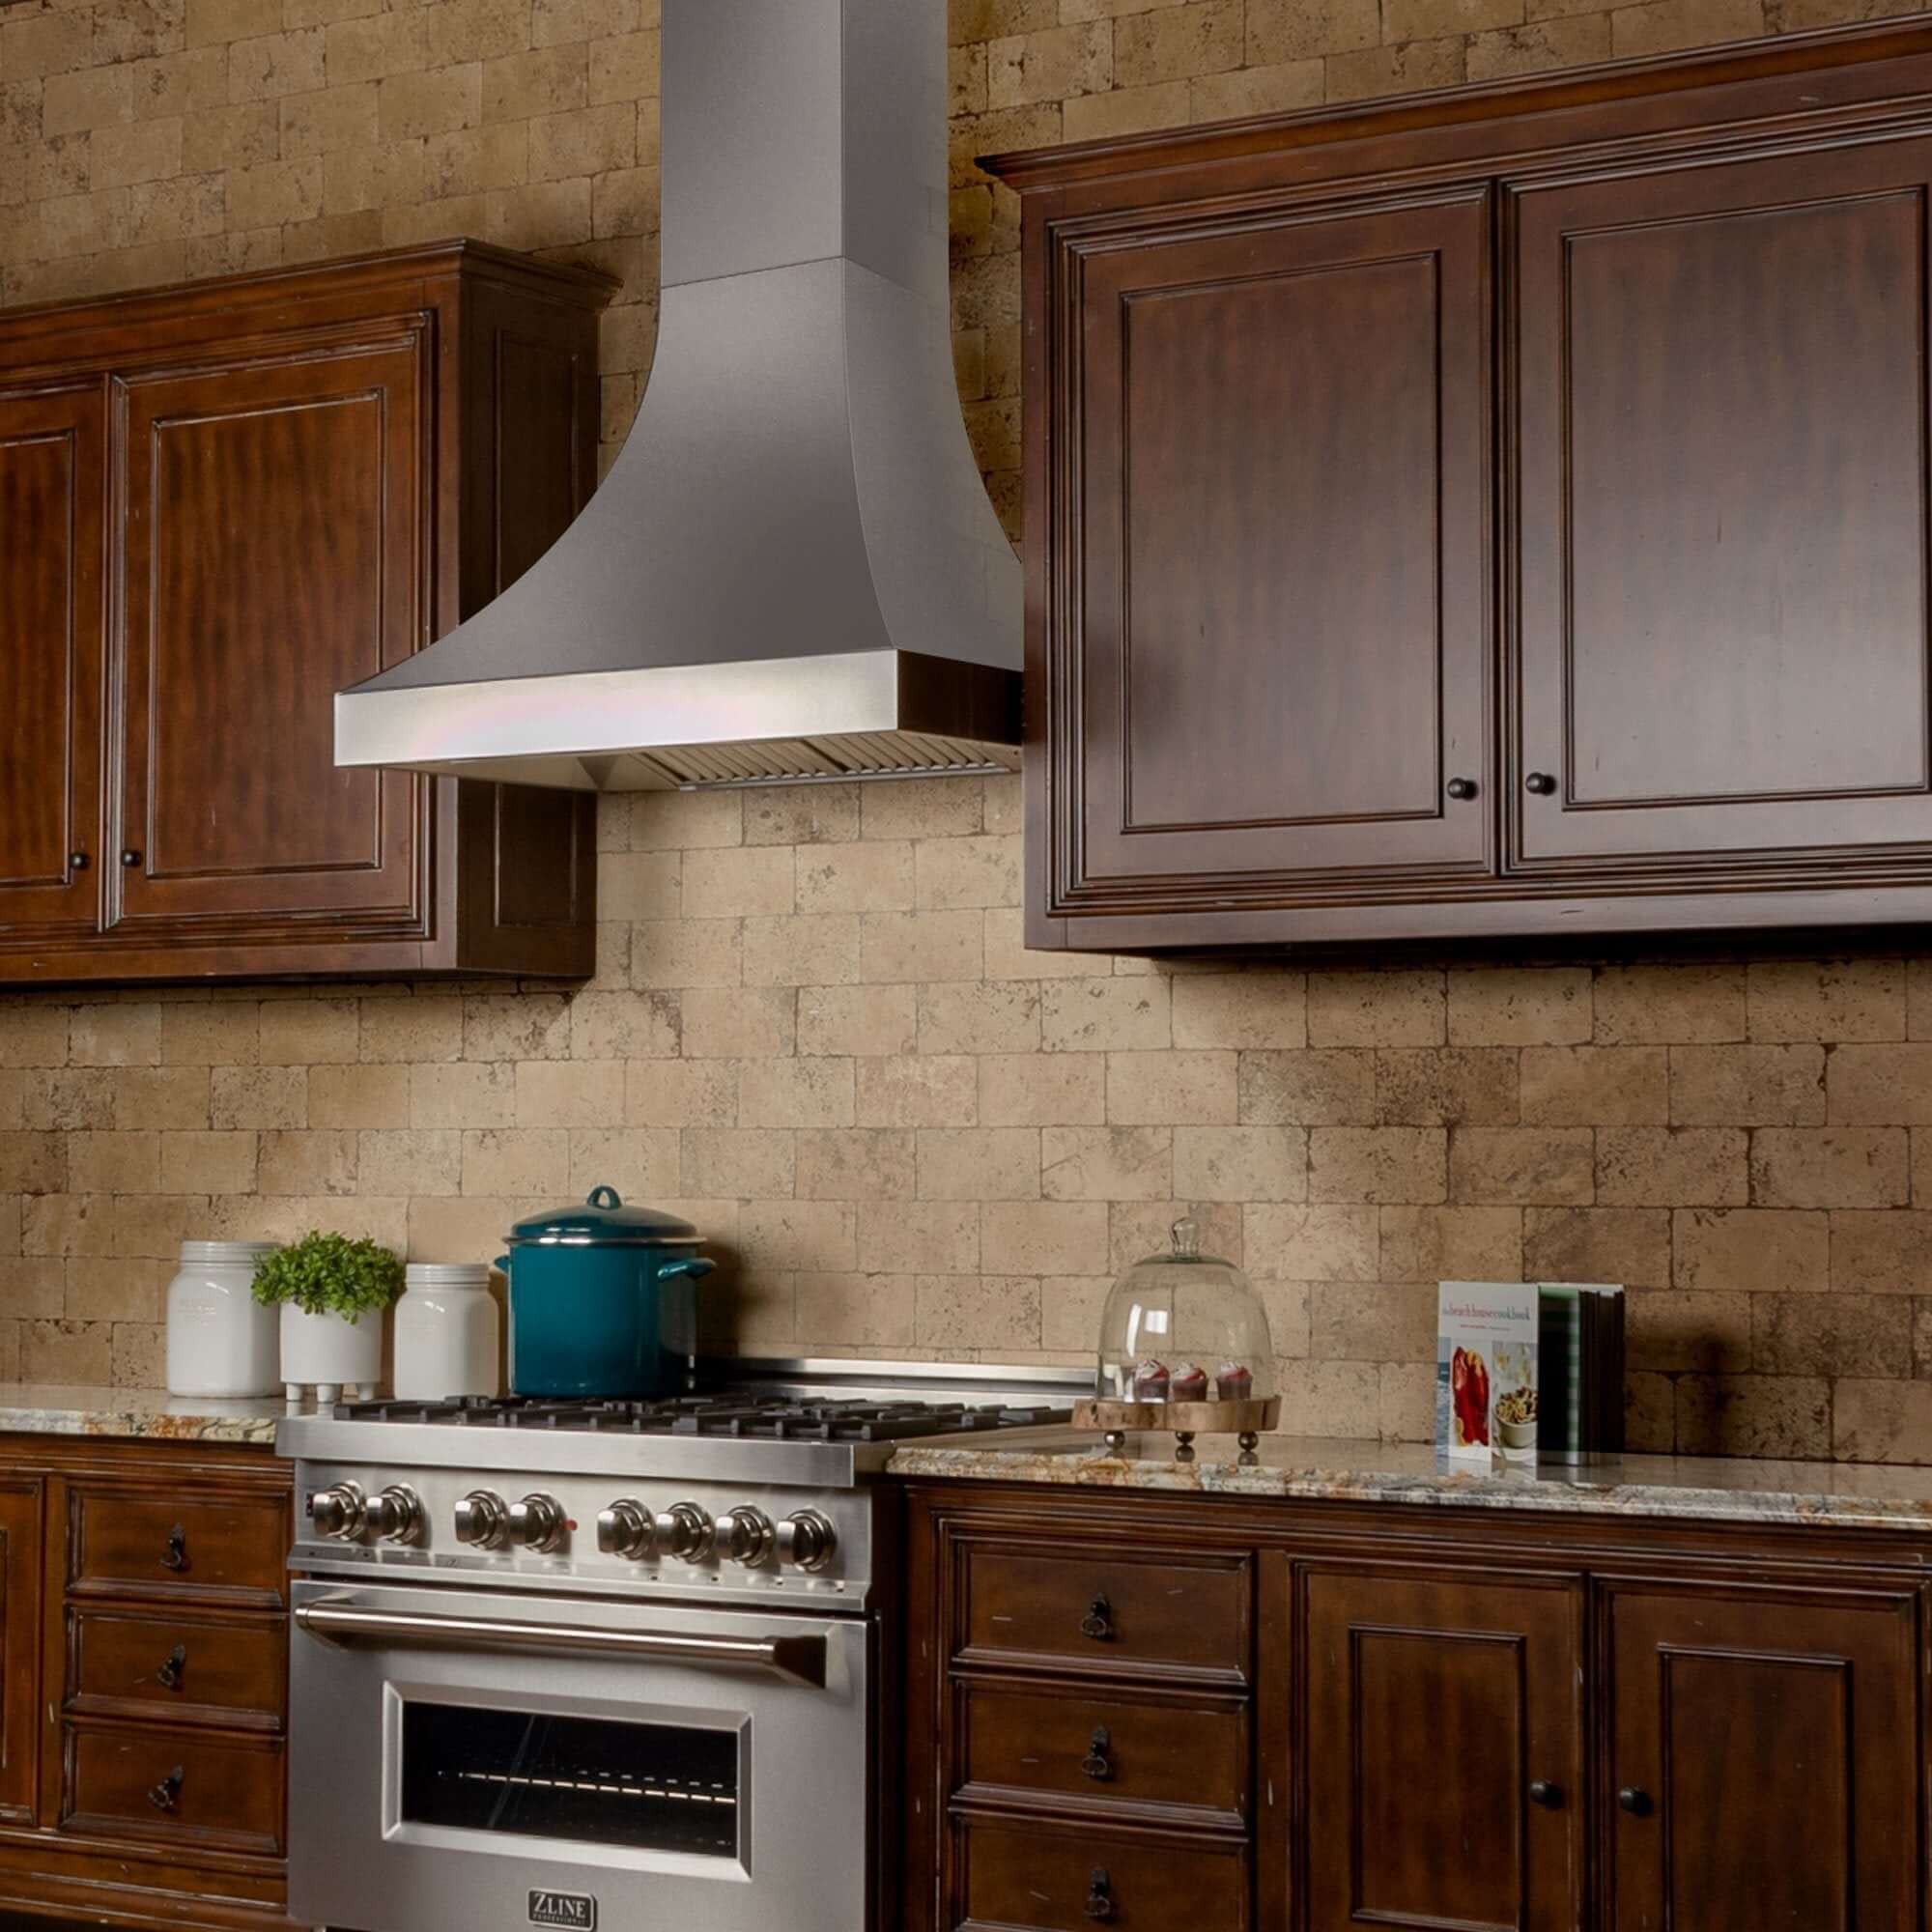 ZLINE Designer Series Fingerprint Resistant Stainless Steel Wall Range Hood (8632S) in a rustic-style kitchen.